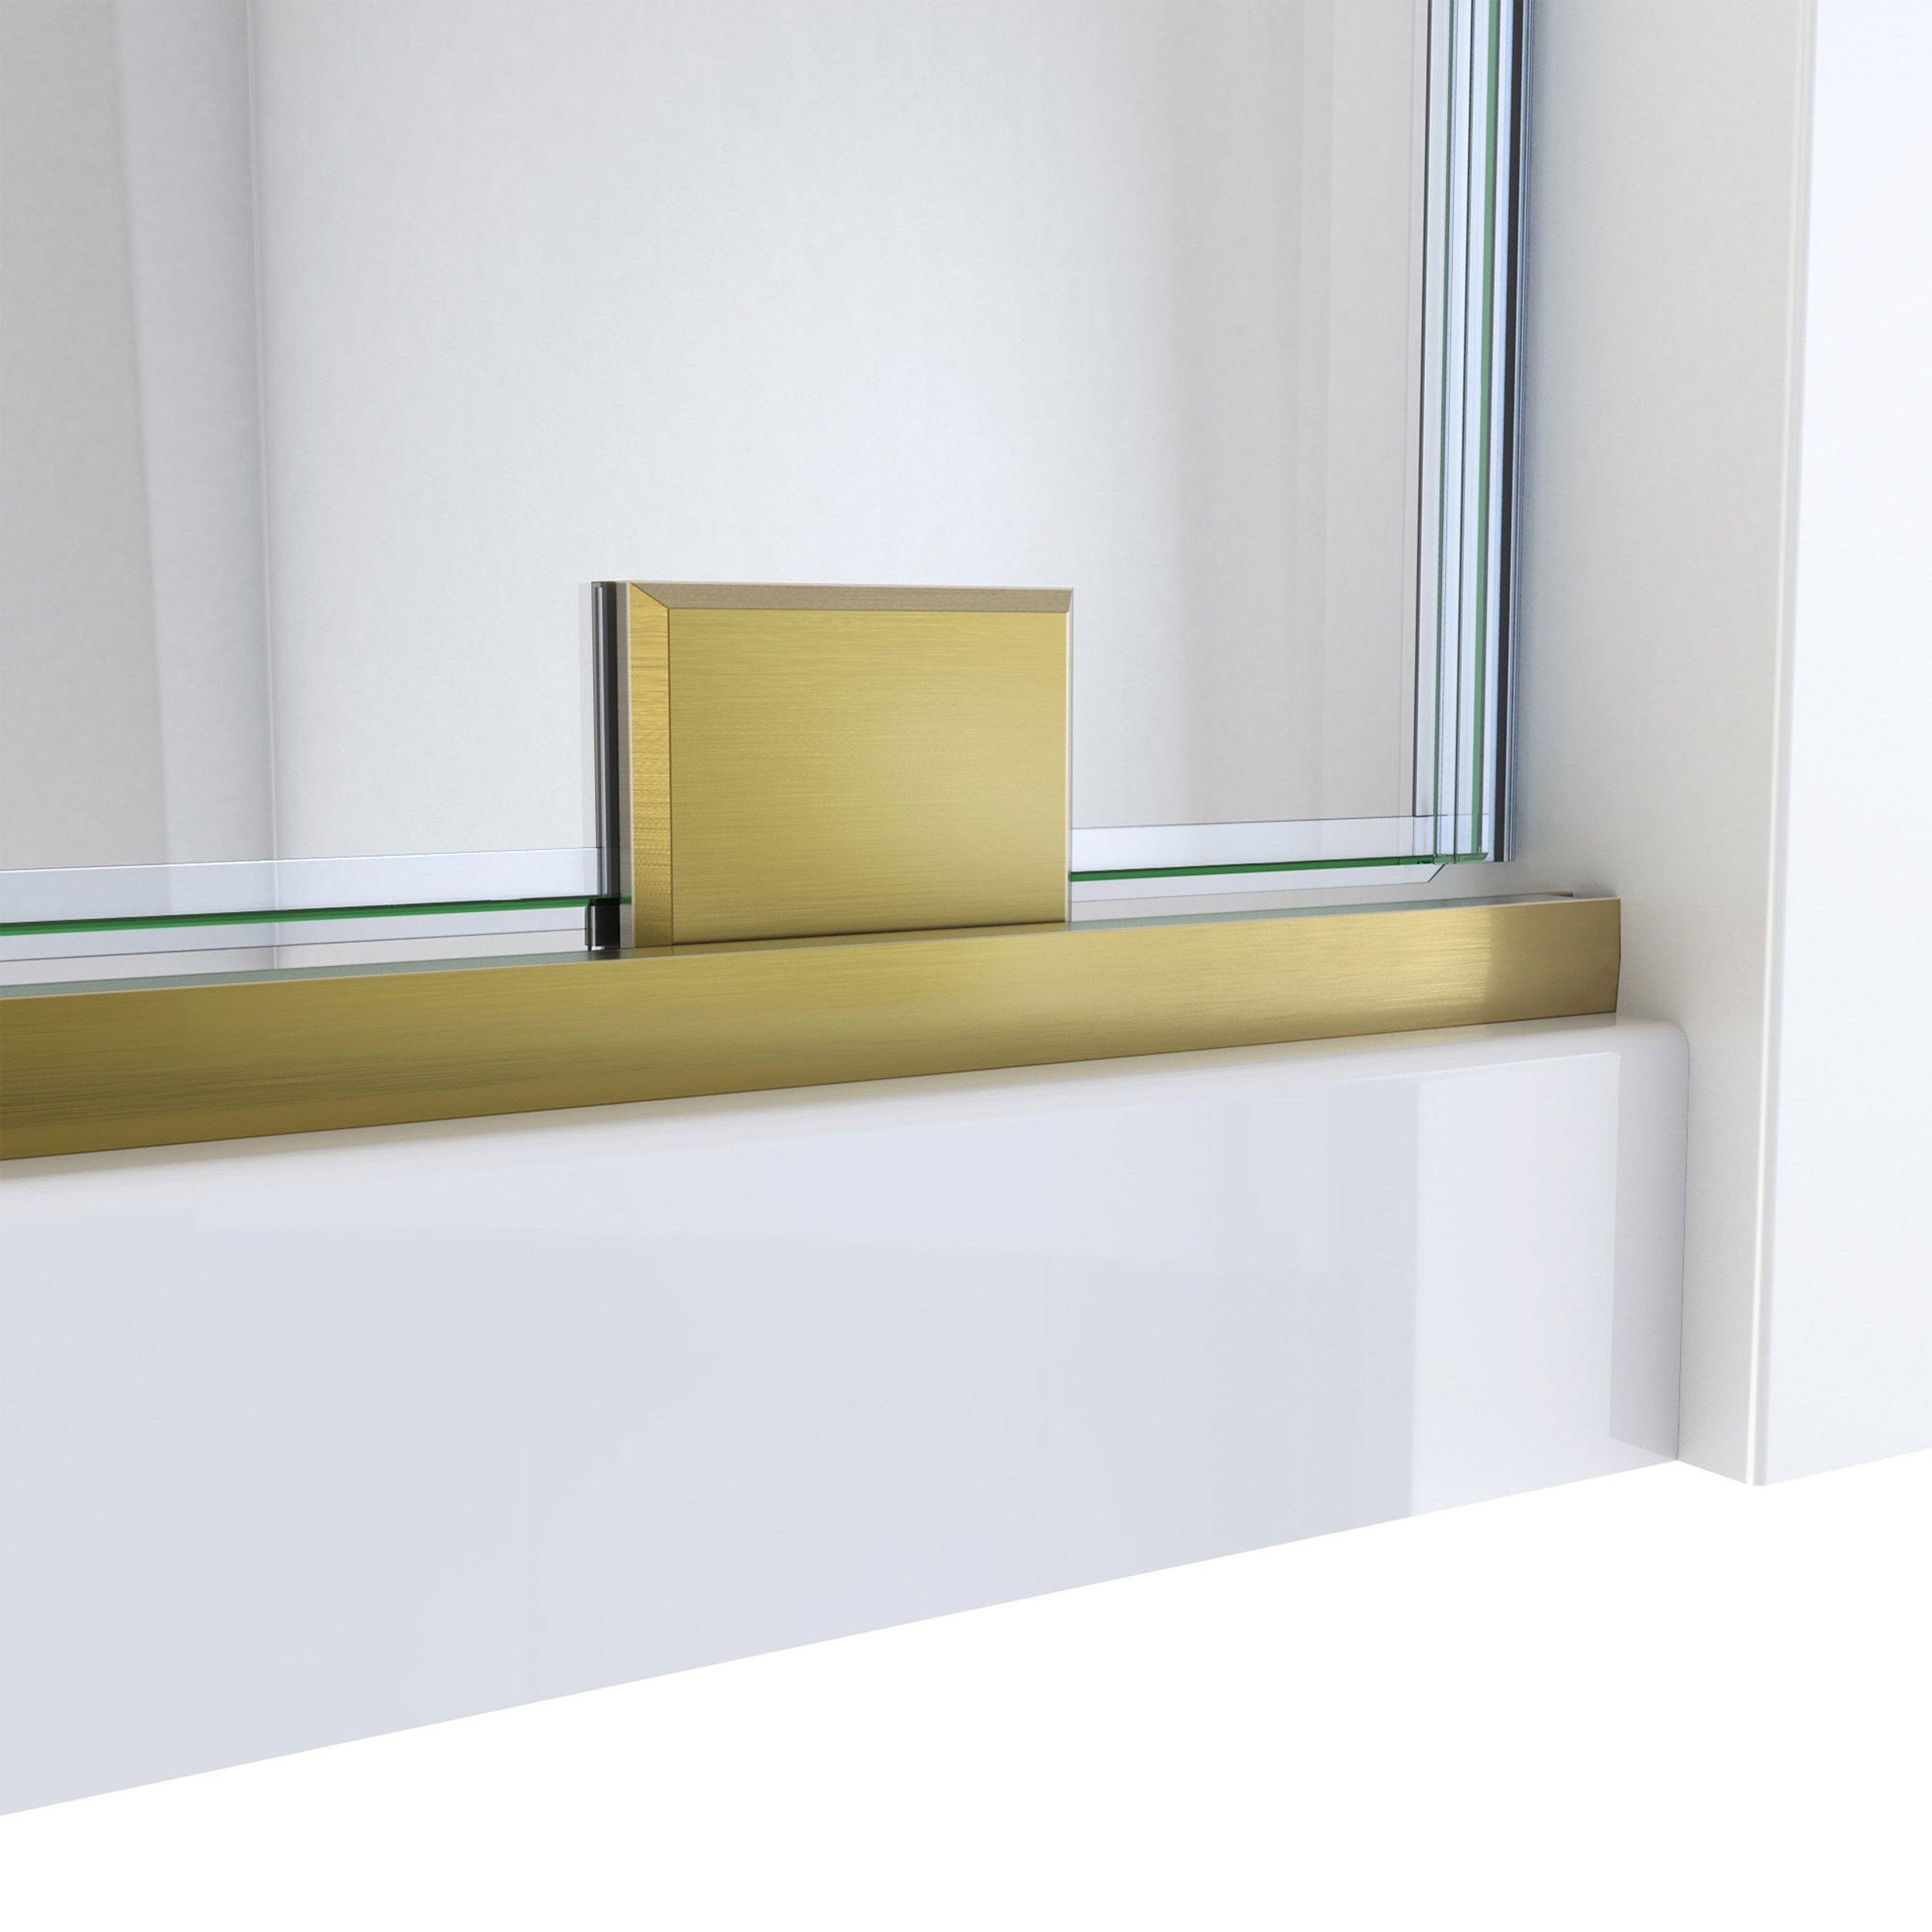 Mirage Brushed Gold Semi Frameless Shower Door